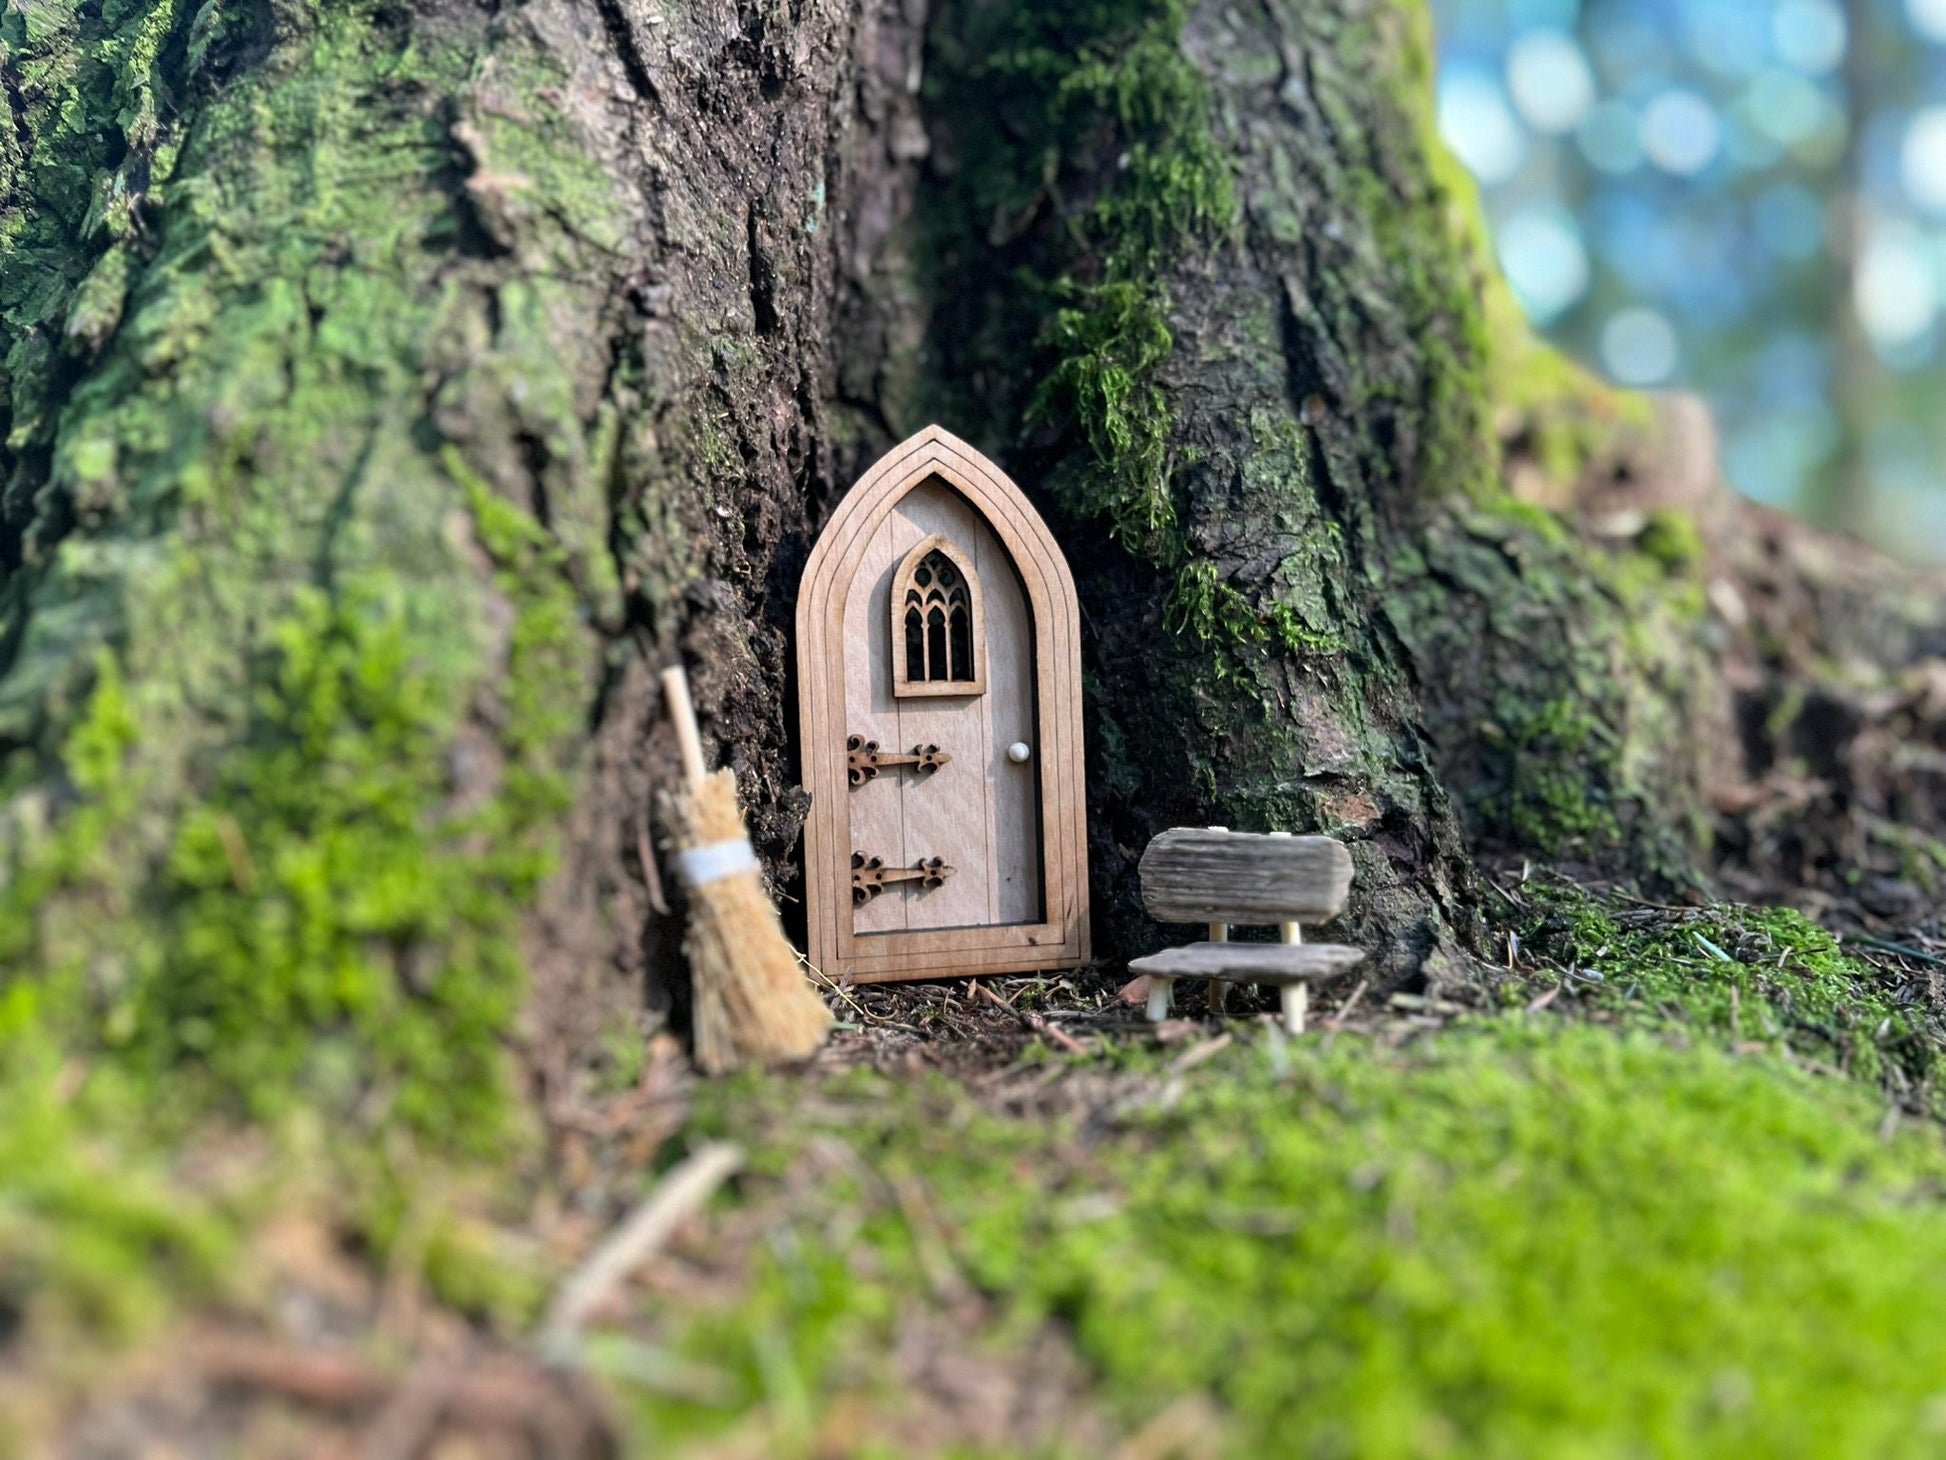 2x Enchanting Handmade Miniature Wood Benches